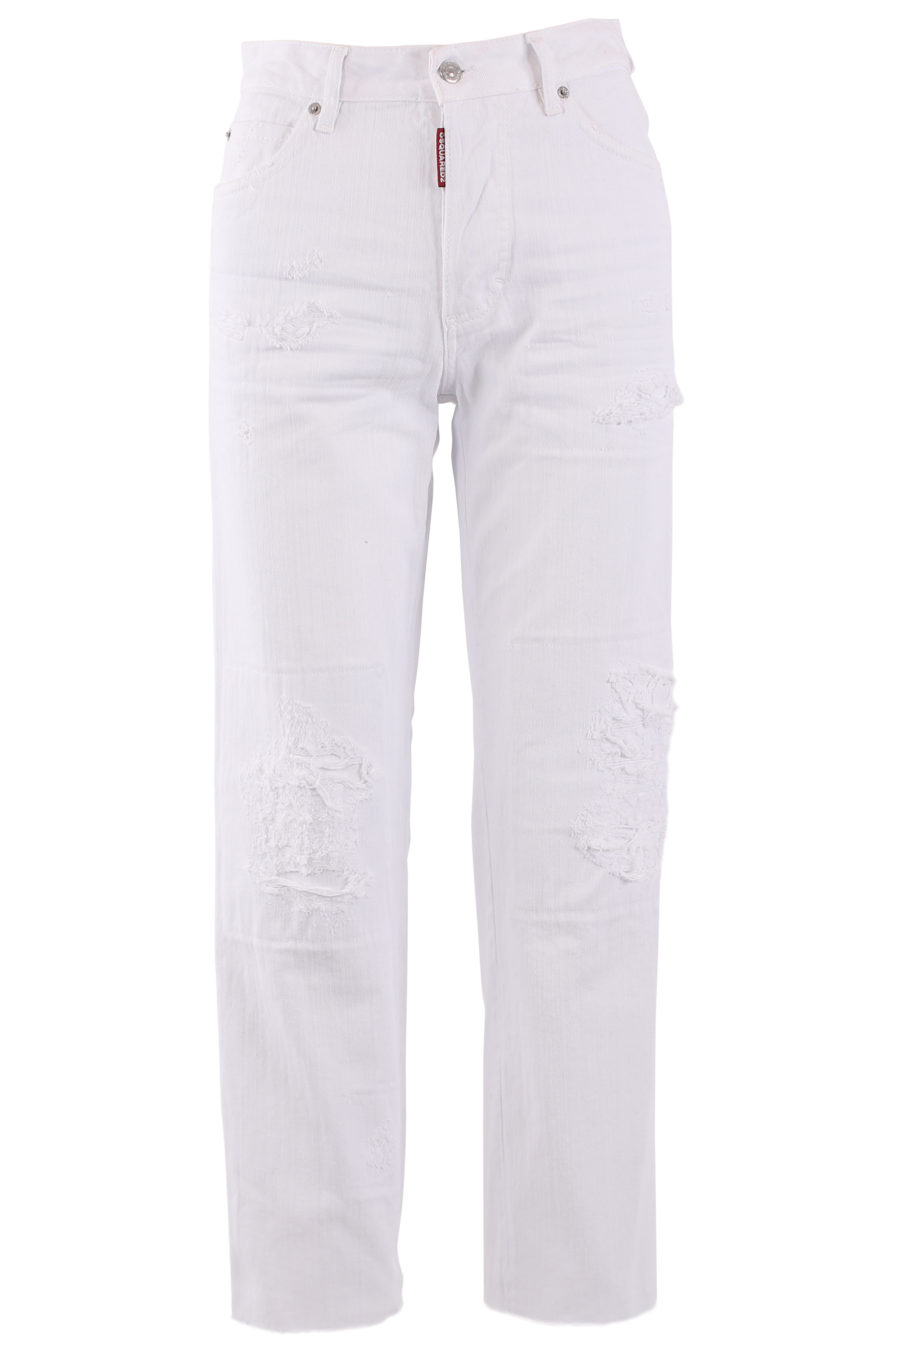 Getragene weiße Jeans "Boston jean" - IMG 6712